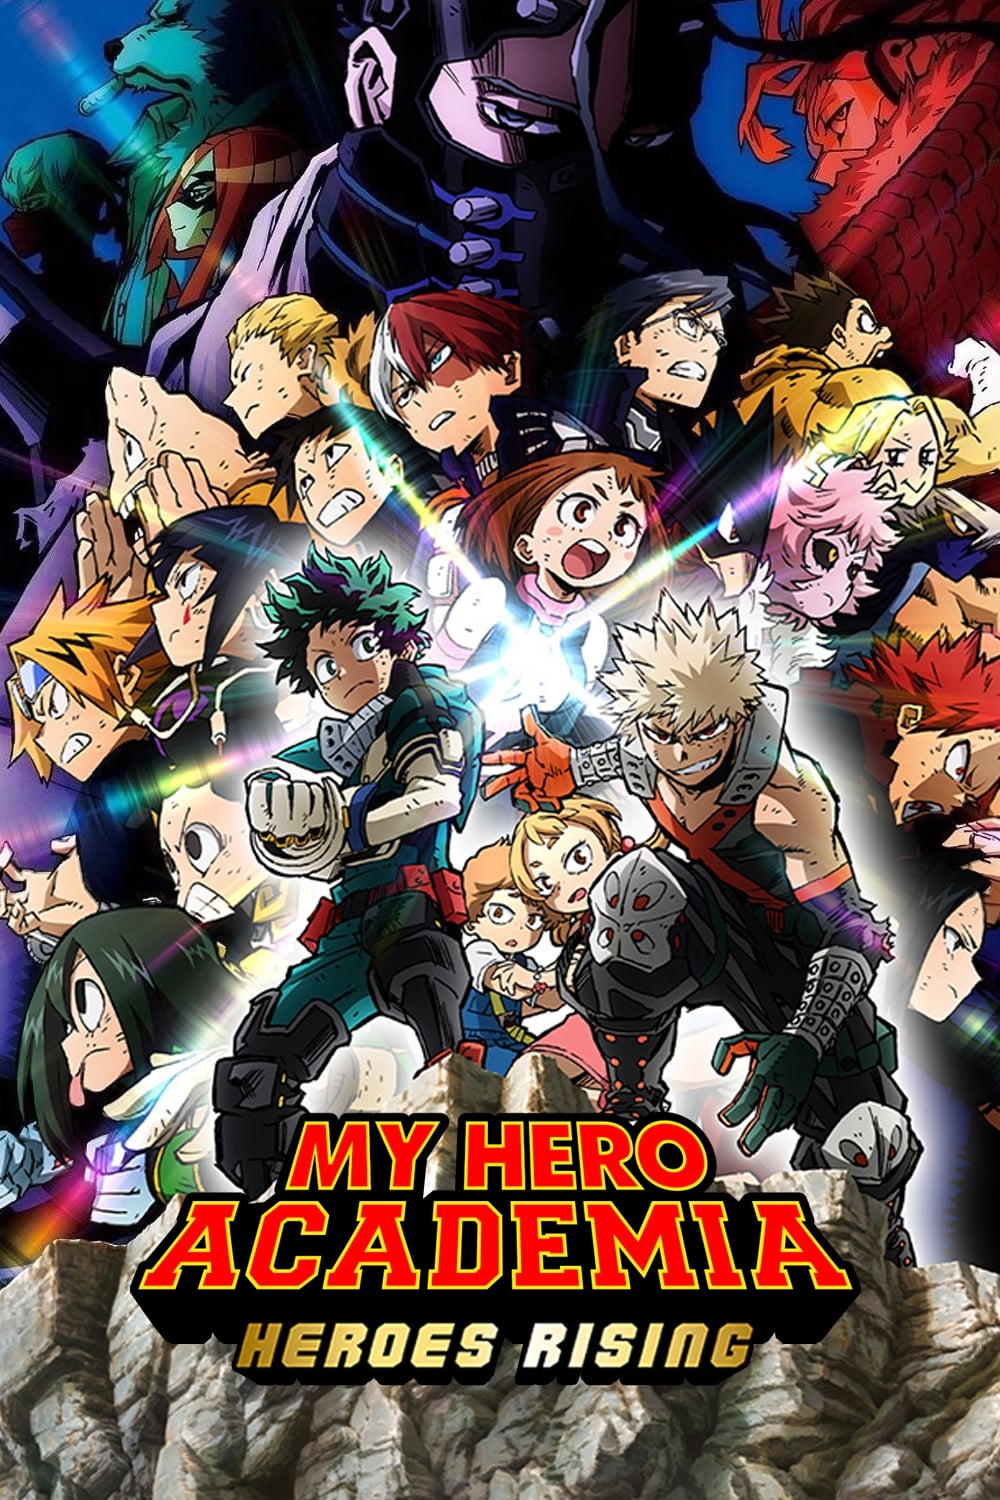 My Hero Academia - Heroes Rising (2019)